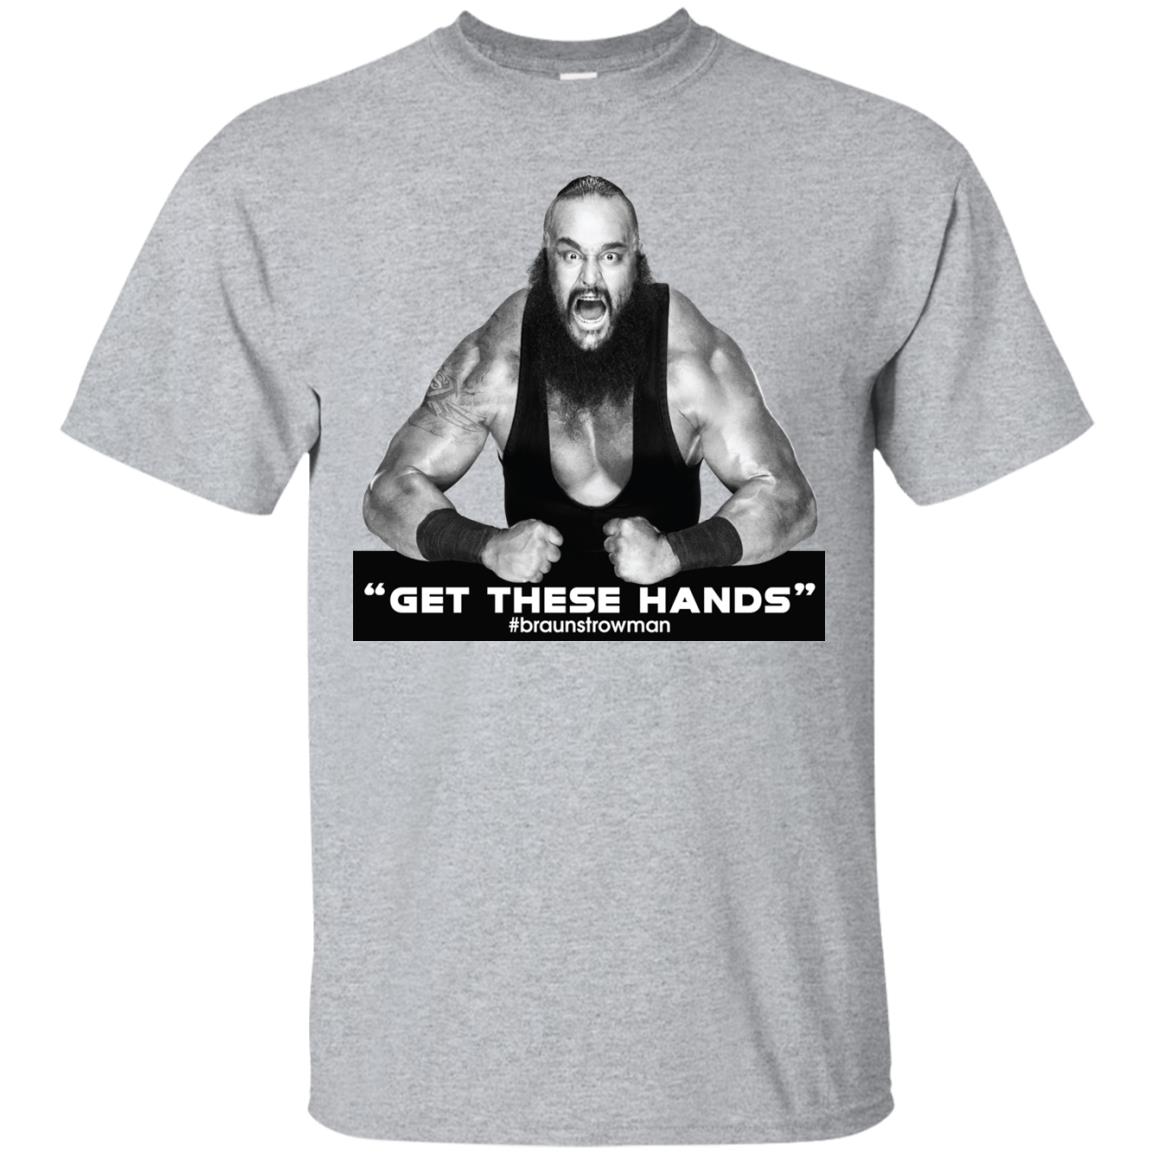 Get these hands Men's T-Shirt/Tank Top hh401m 